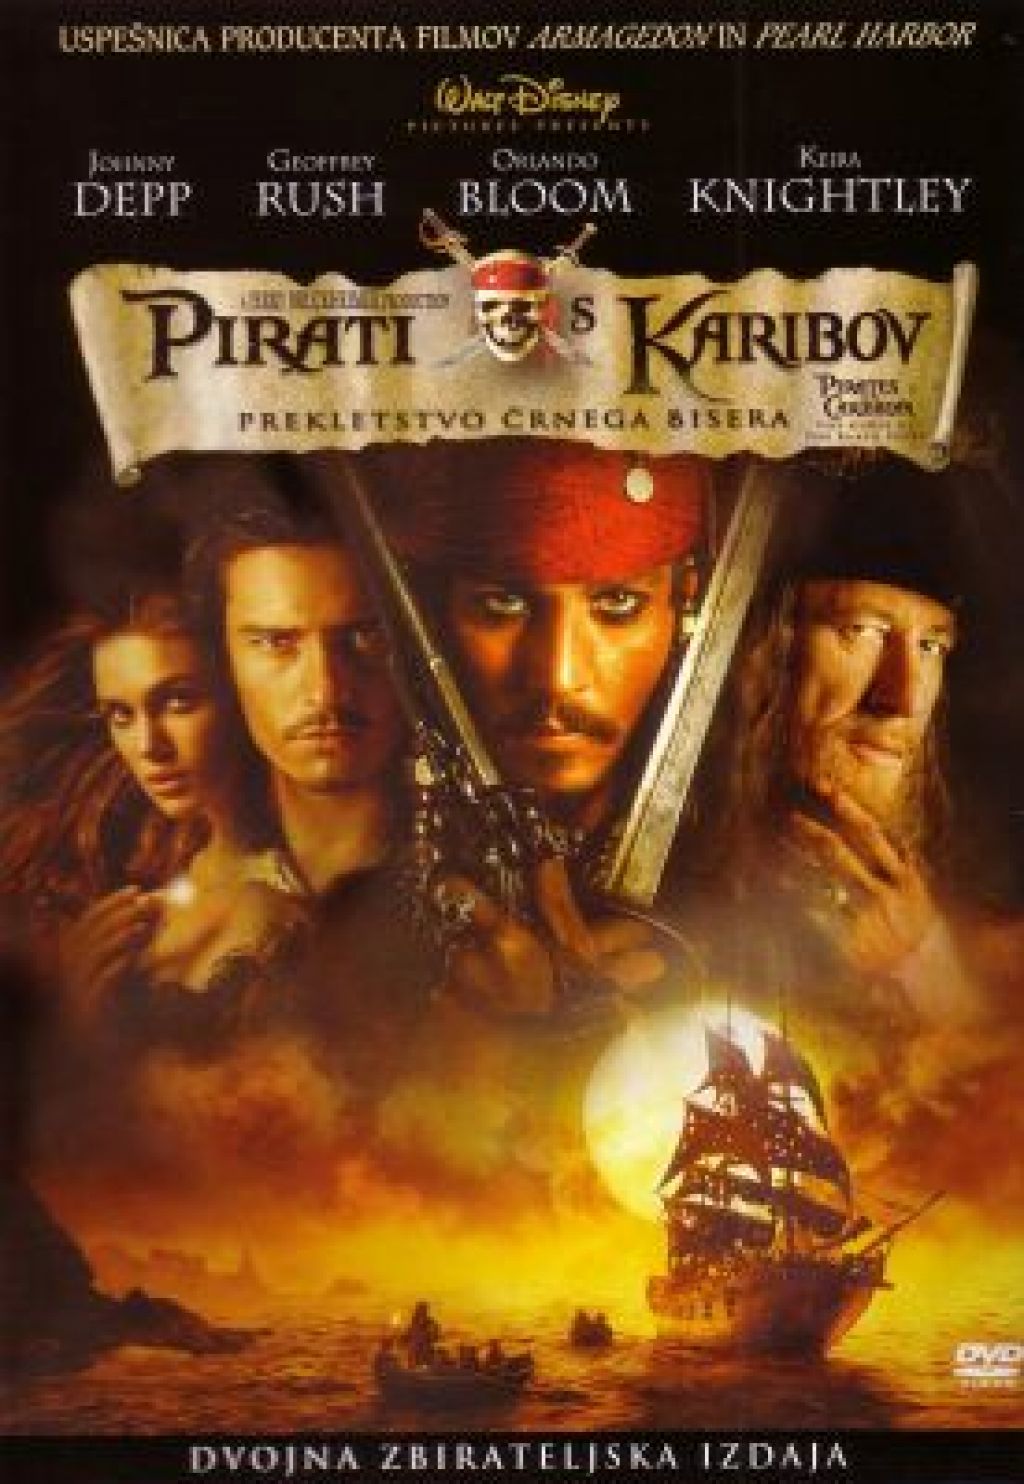 Johnny Depp v stranski vlogi Piratov s Karibov?